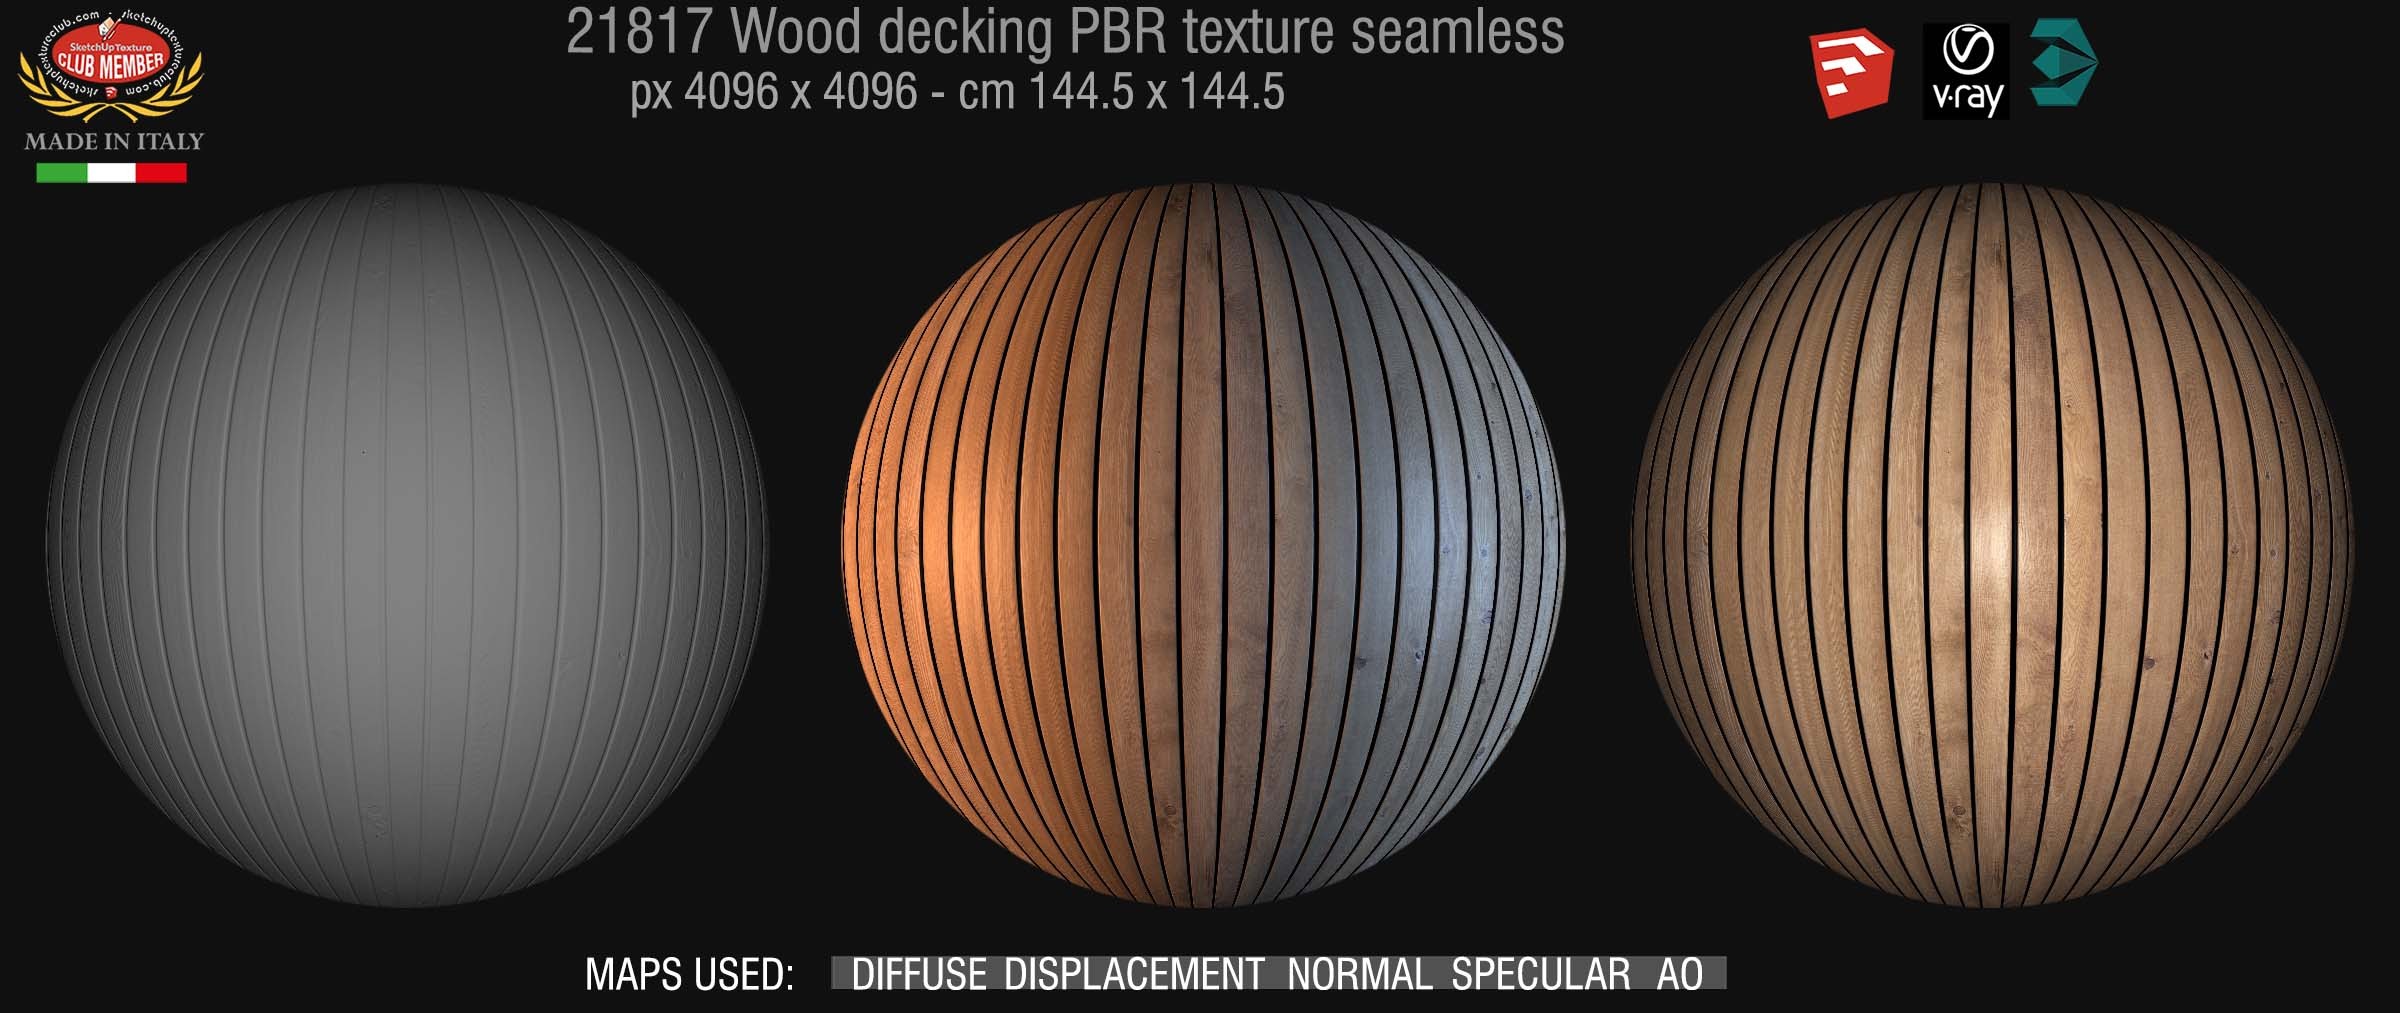 21817 wood decking PBR texture seamless DEMO